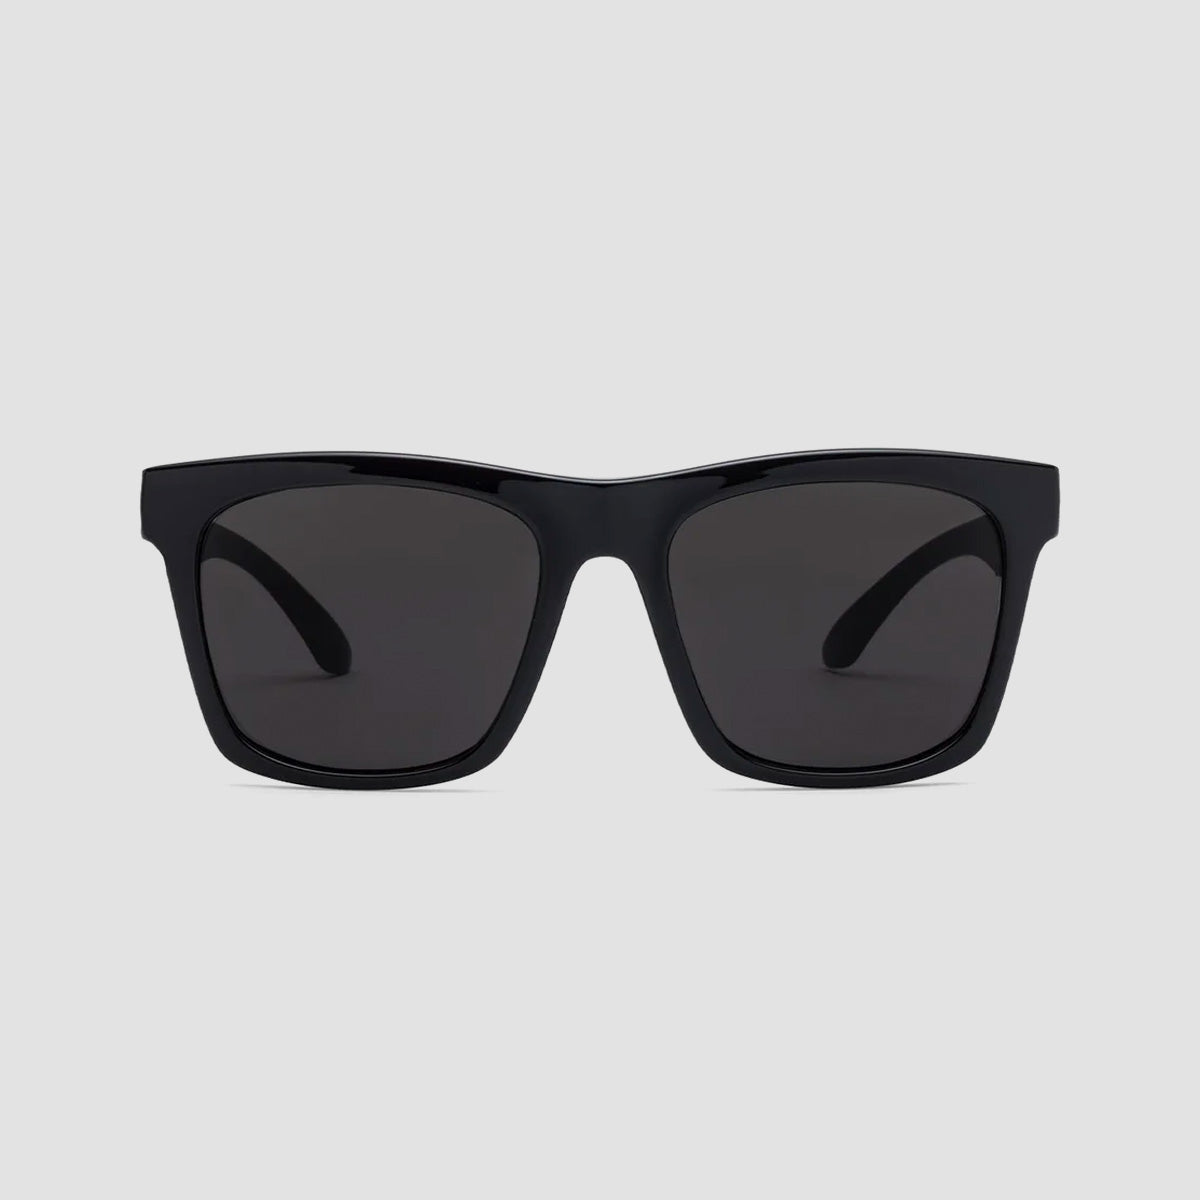 Volcom Jewel Sunglasses Gloss Black/Grey - Womens